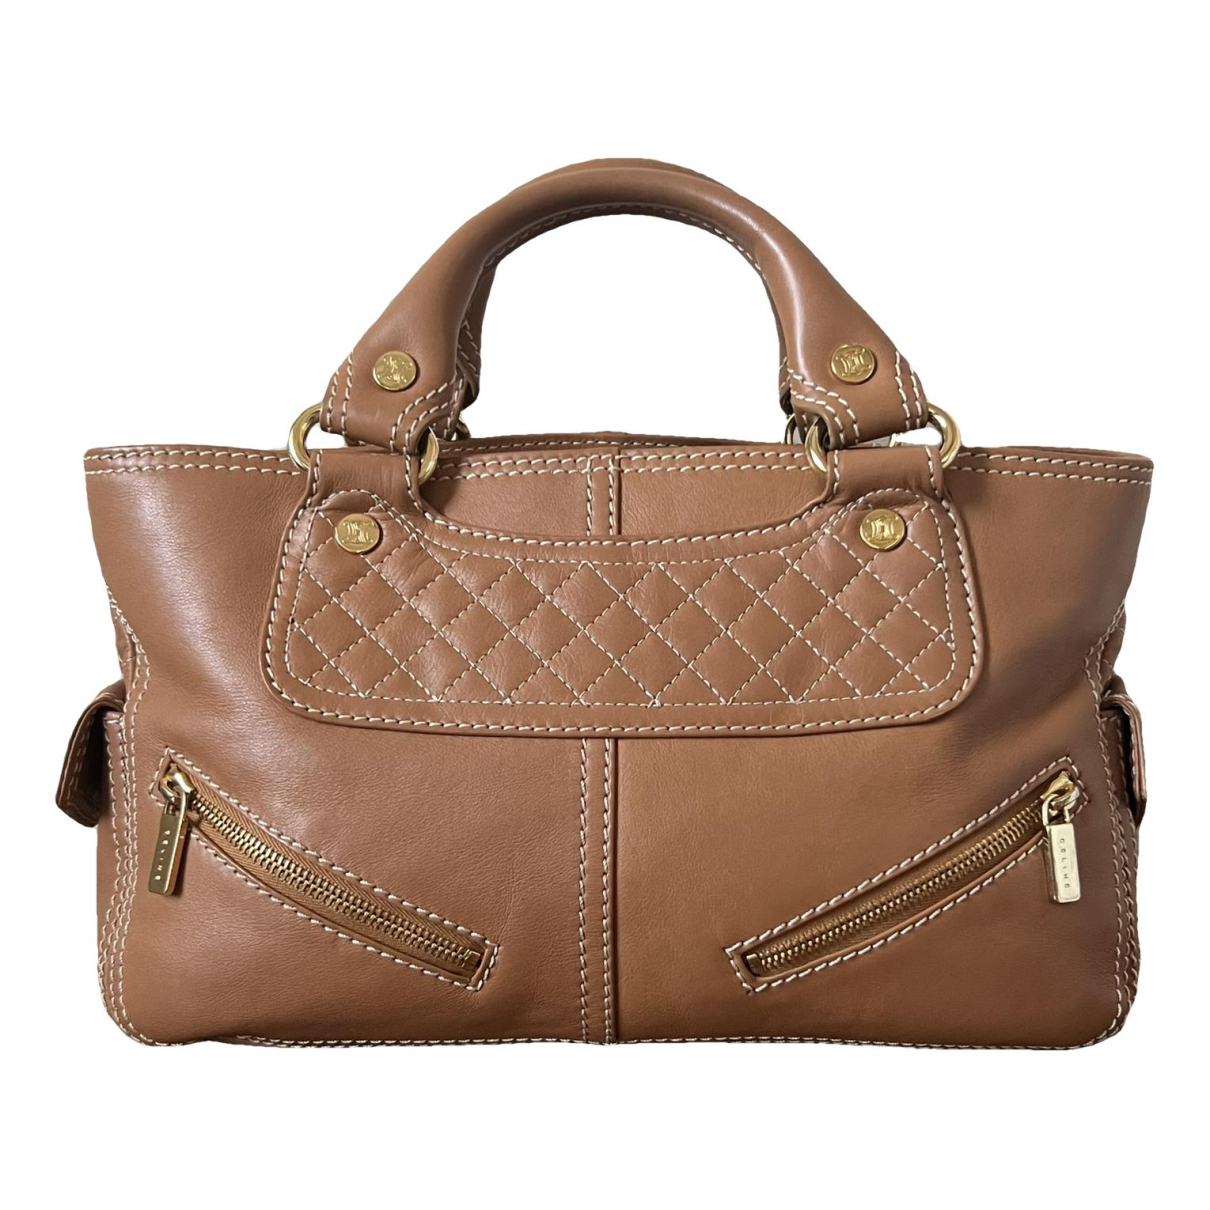 image of Celine Boogie leather handbag